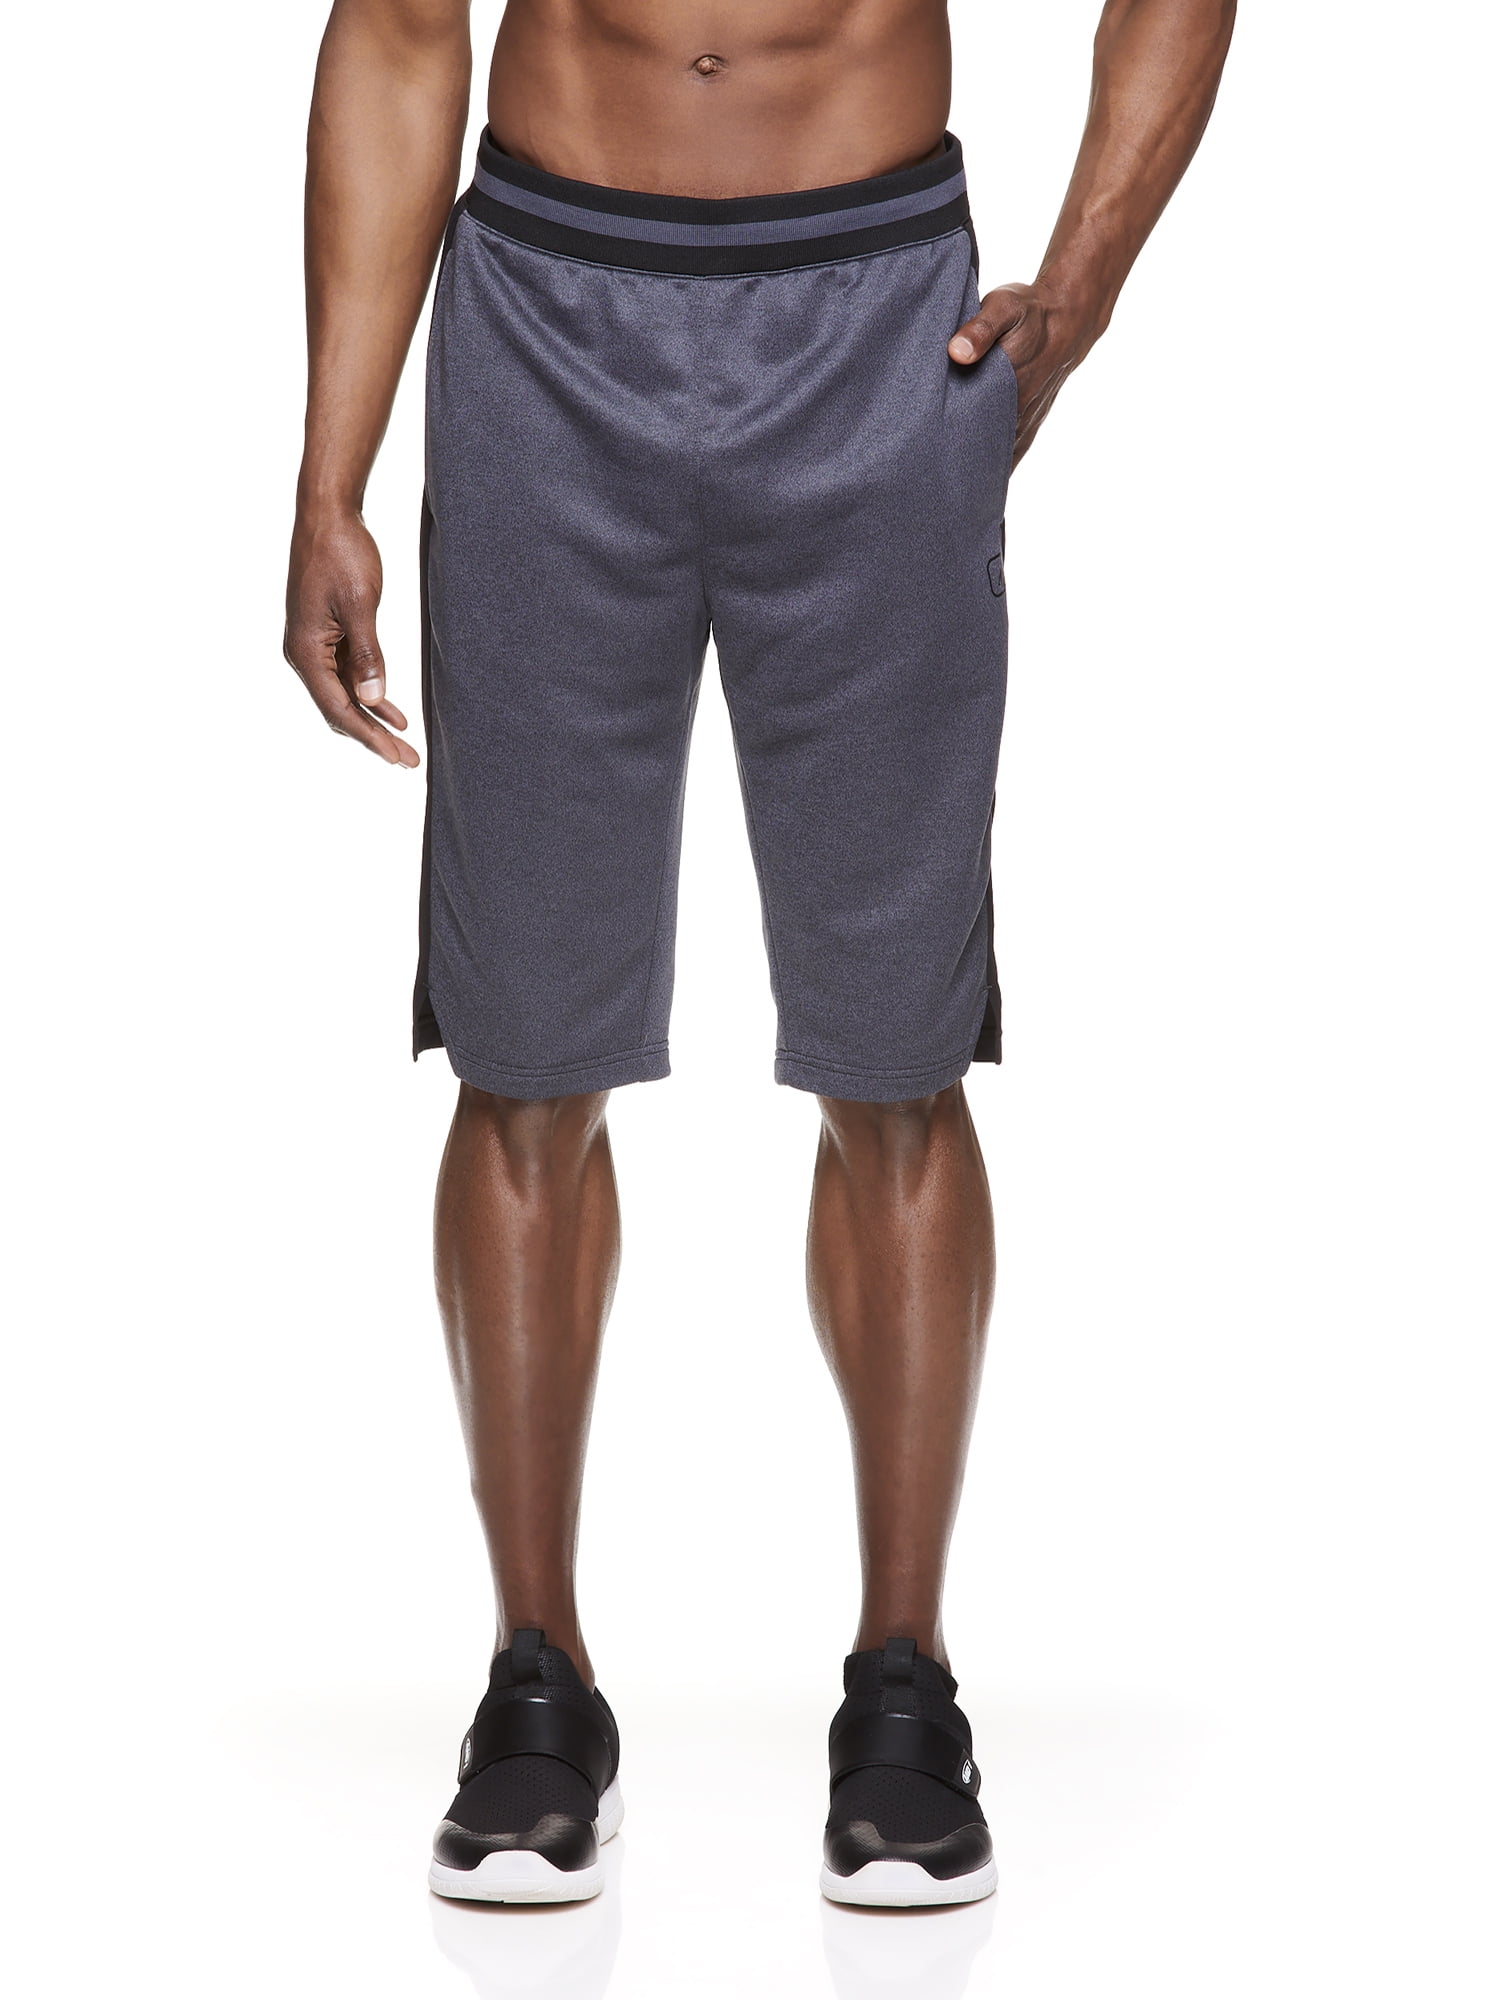 Men's Basketball Shorts, inch - Walmart.com